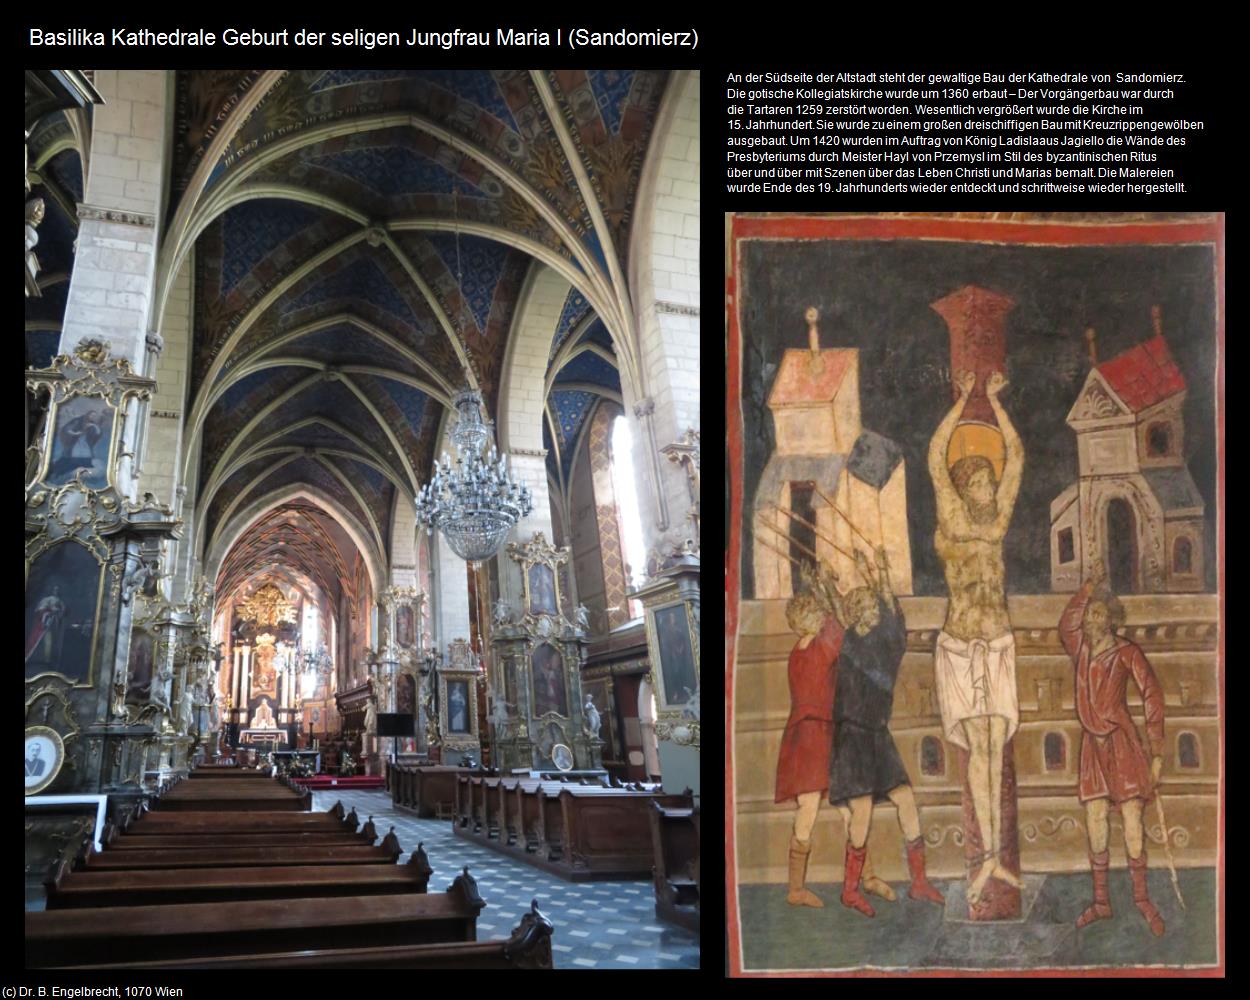 Basilika Kathedrale Geburt der seligen Jungfrau Maria I  (Sandomierz) in POLEN-Galizien